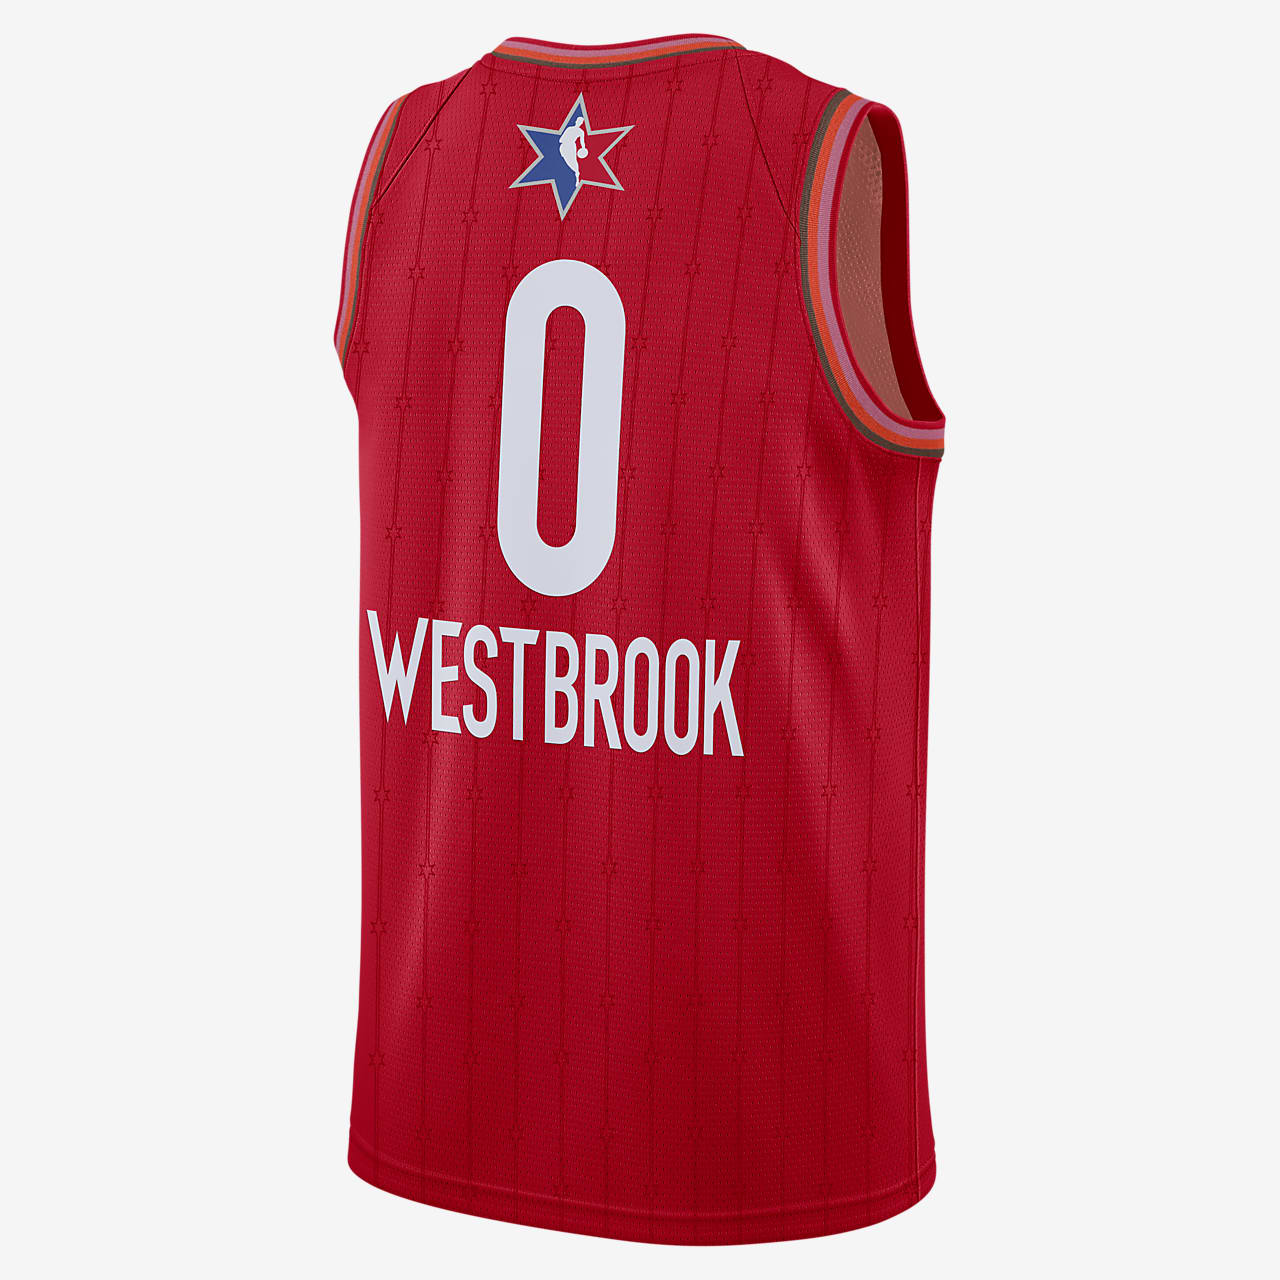 russell westbrook jersey nike